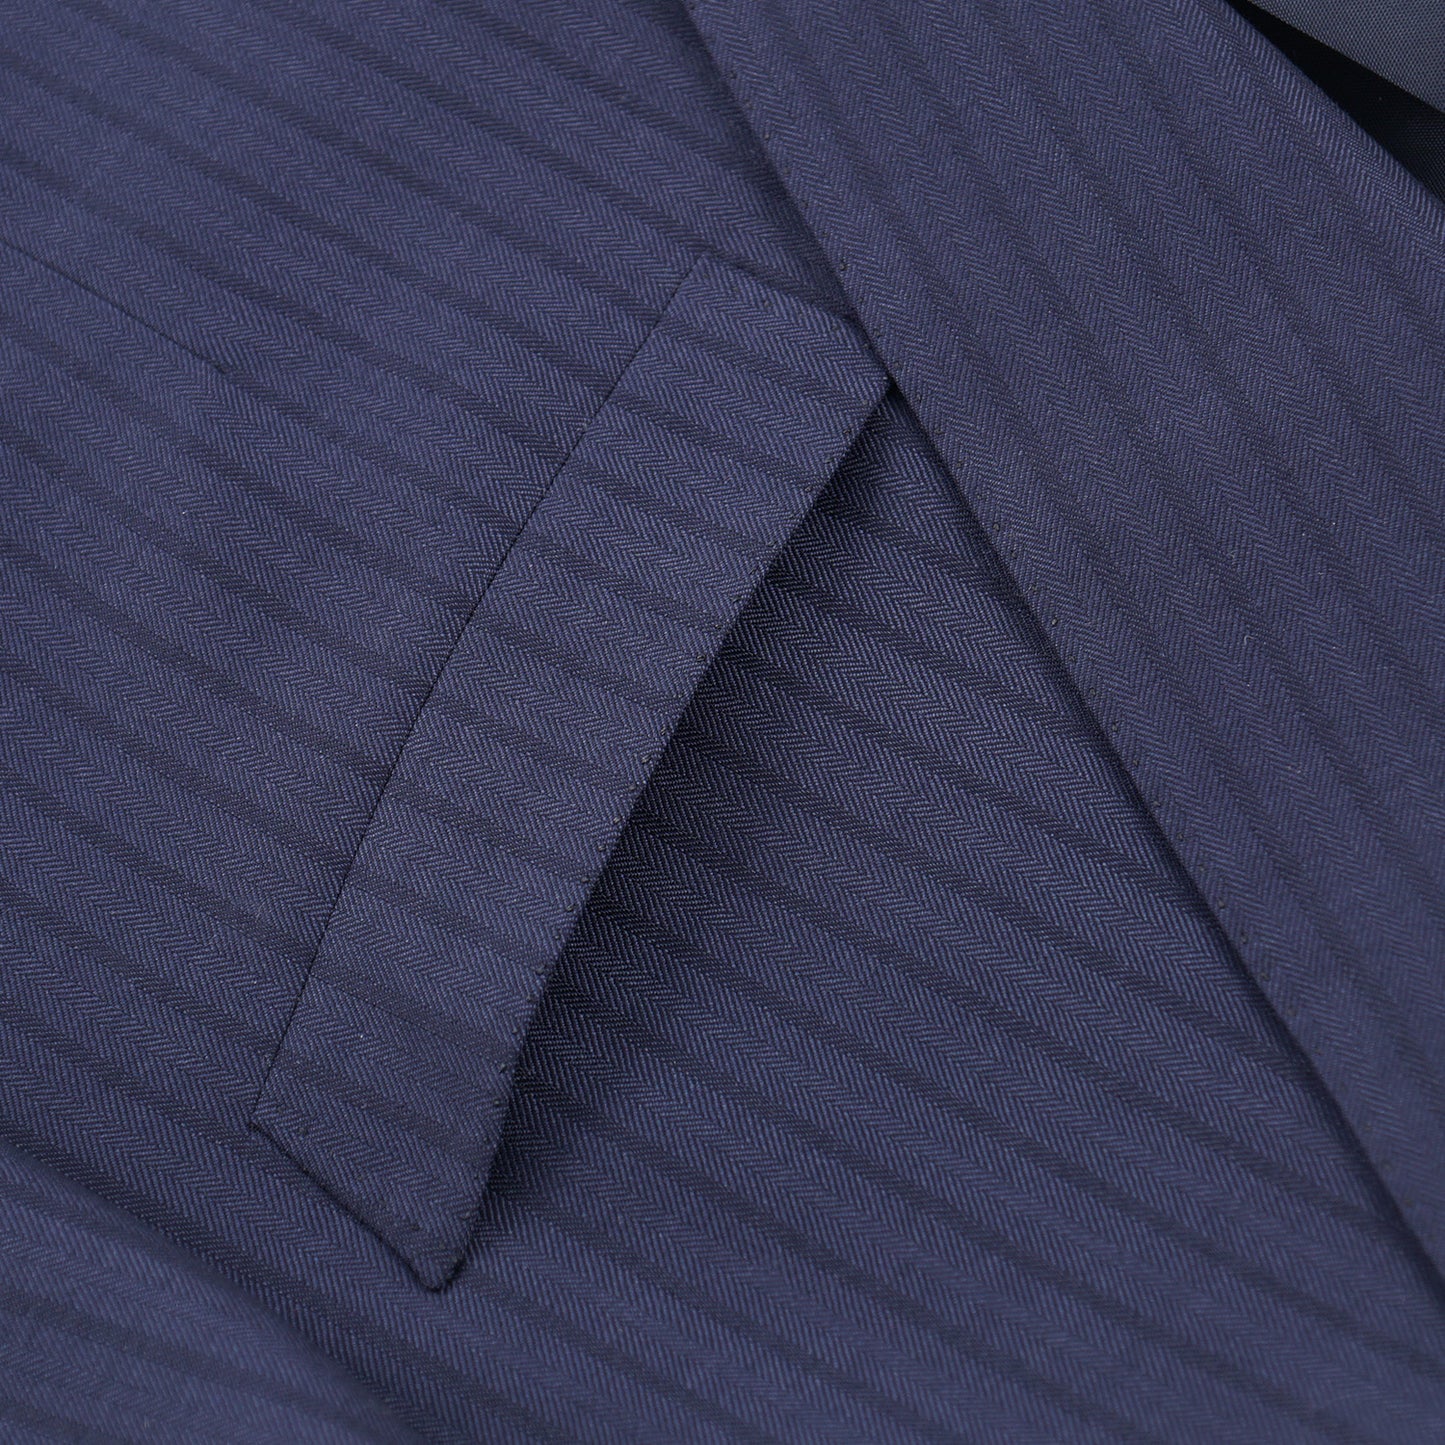 Zilli Dark Blue Stripe Superfine Wool Suit - Top Shelf Apparel